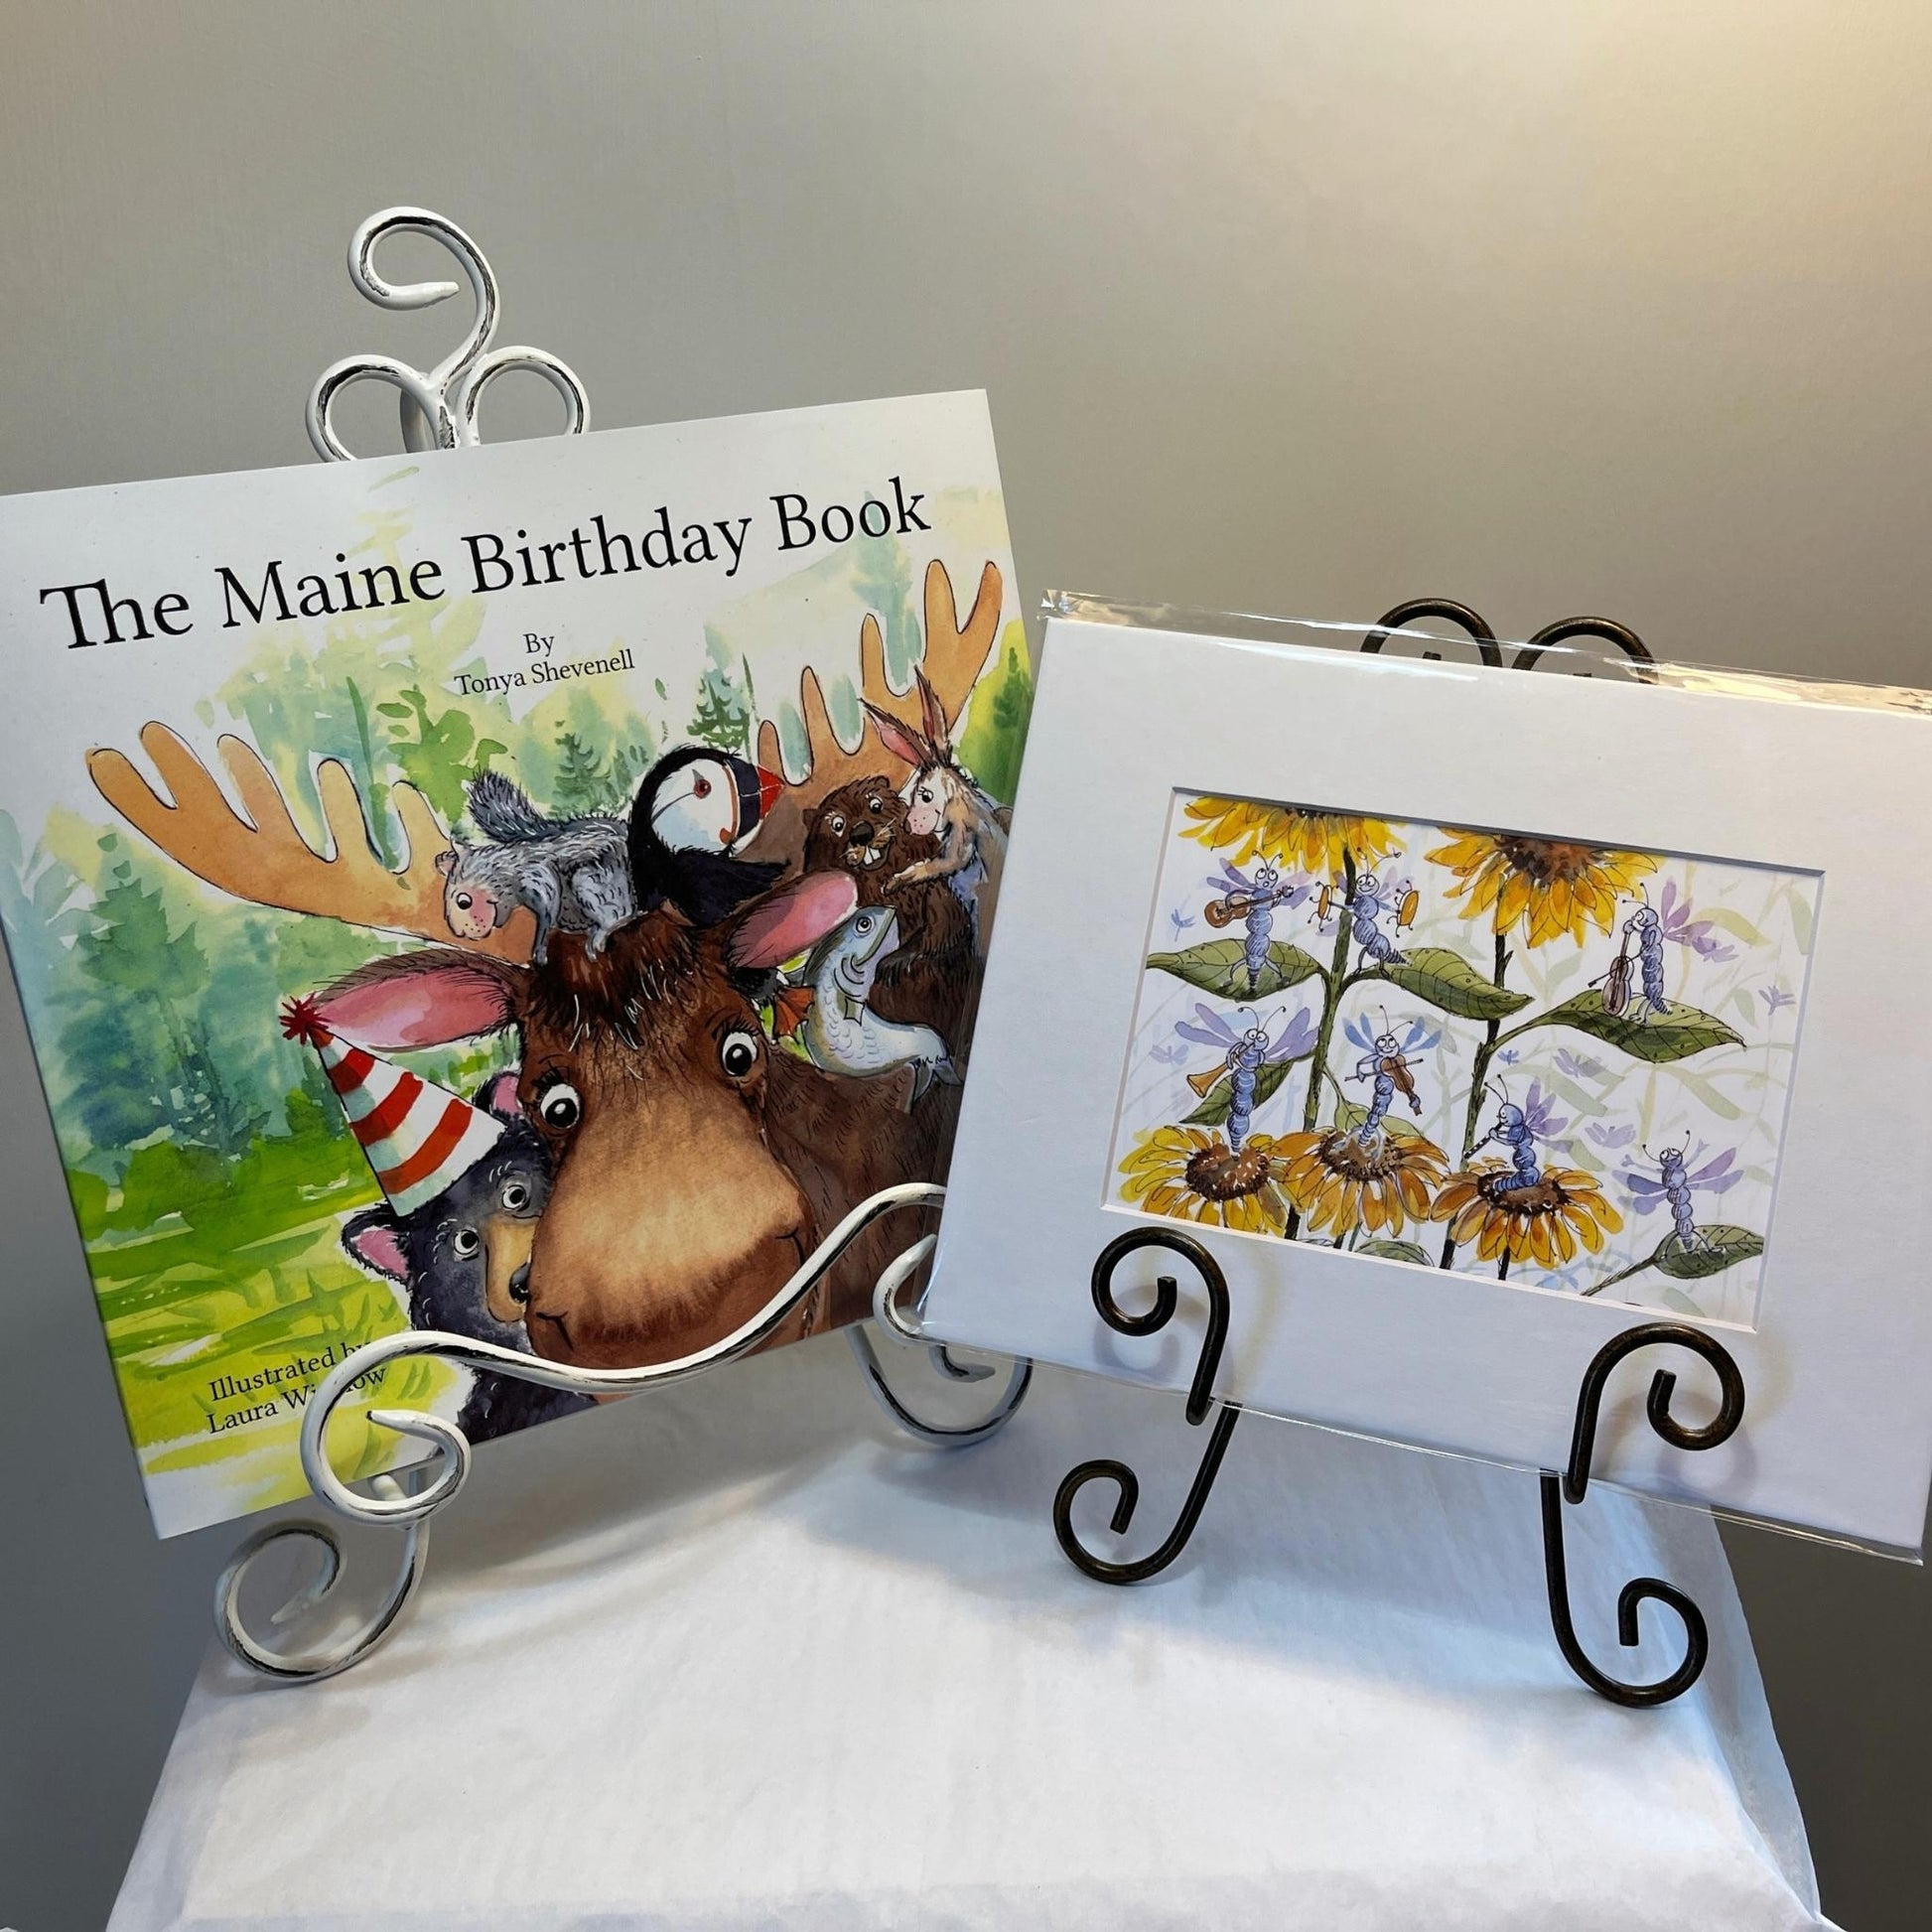 Maine Birthday Book and Dragonflies Garden Band Art Print